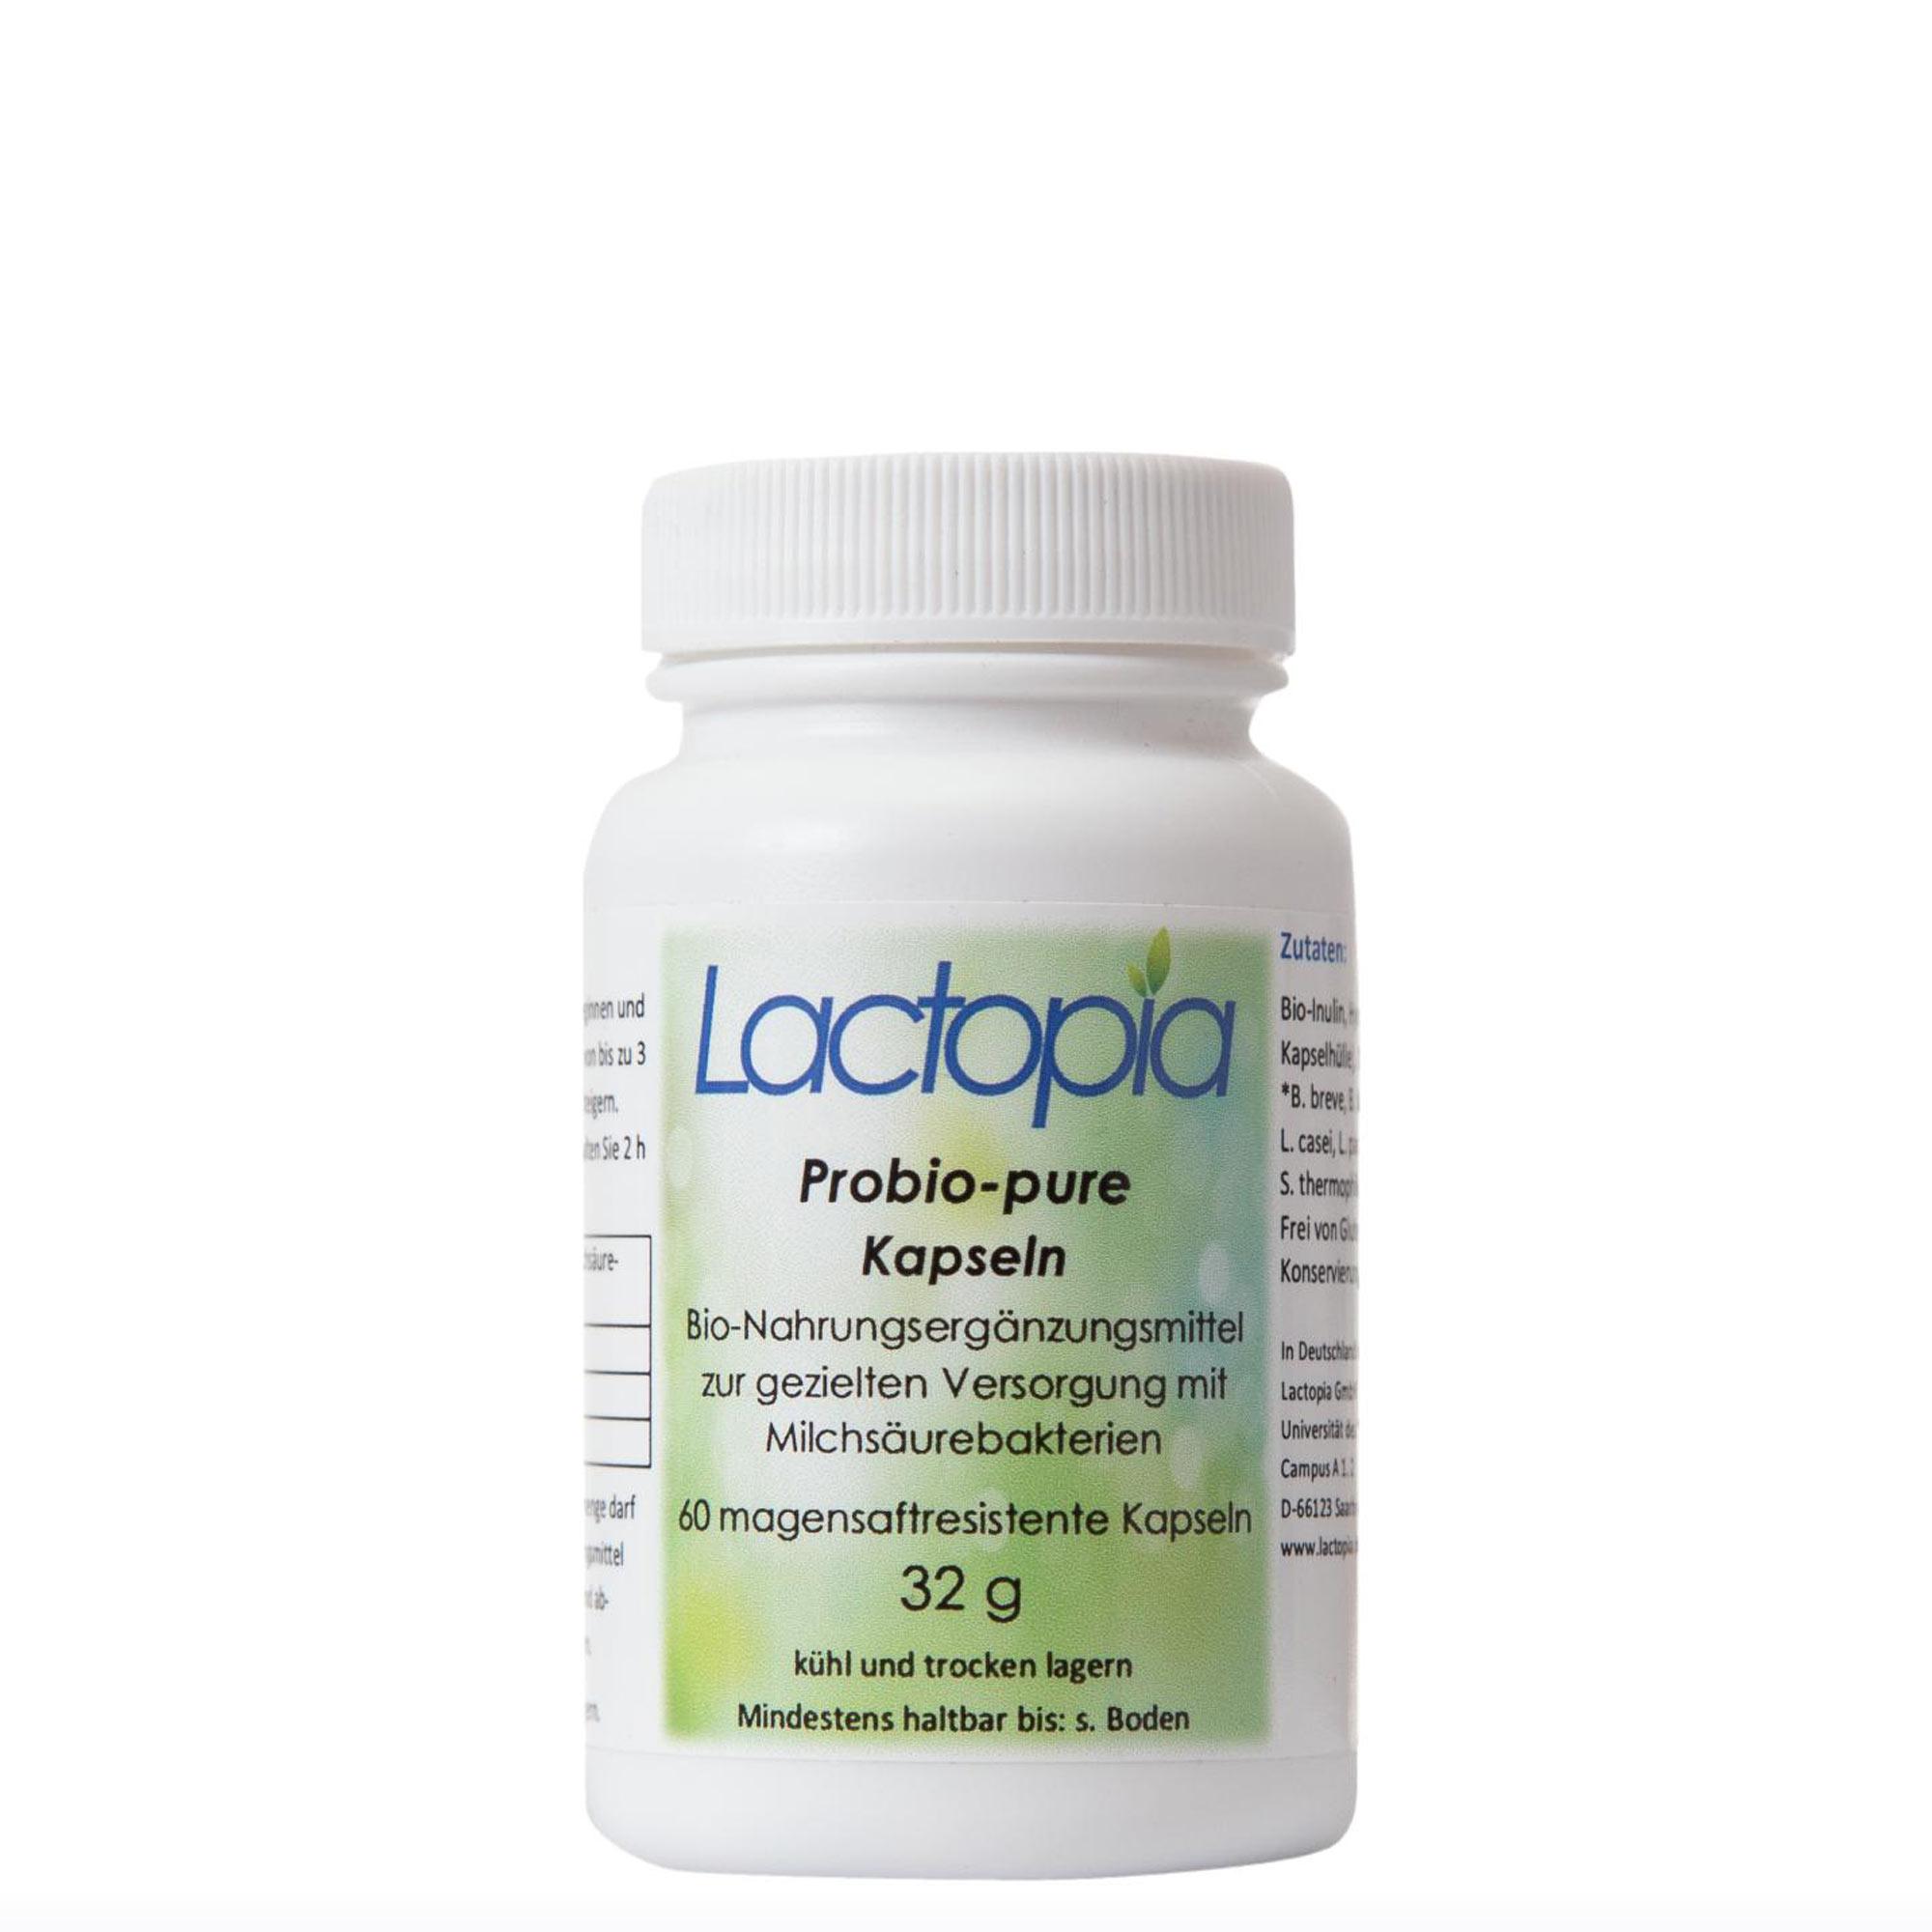 Lactopia Probio-pure Probiotika Kapseln 100 Stück